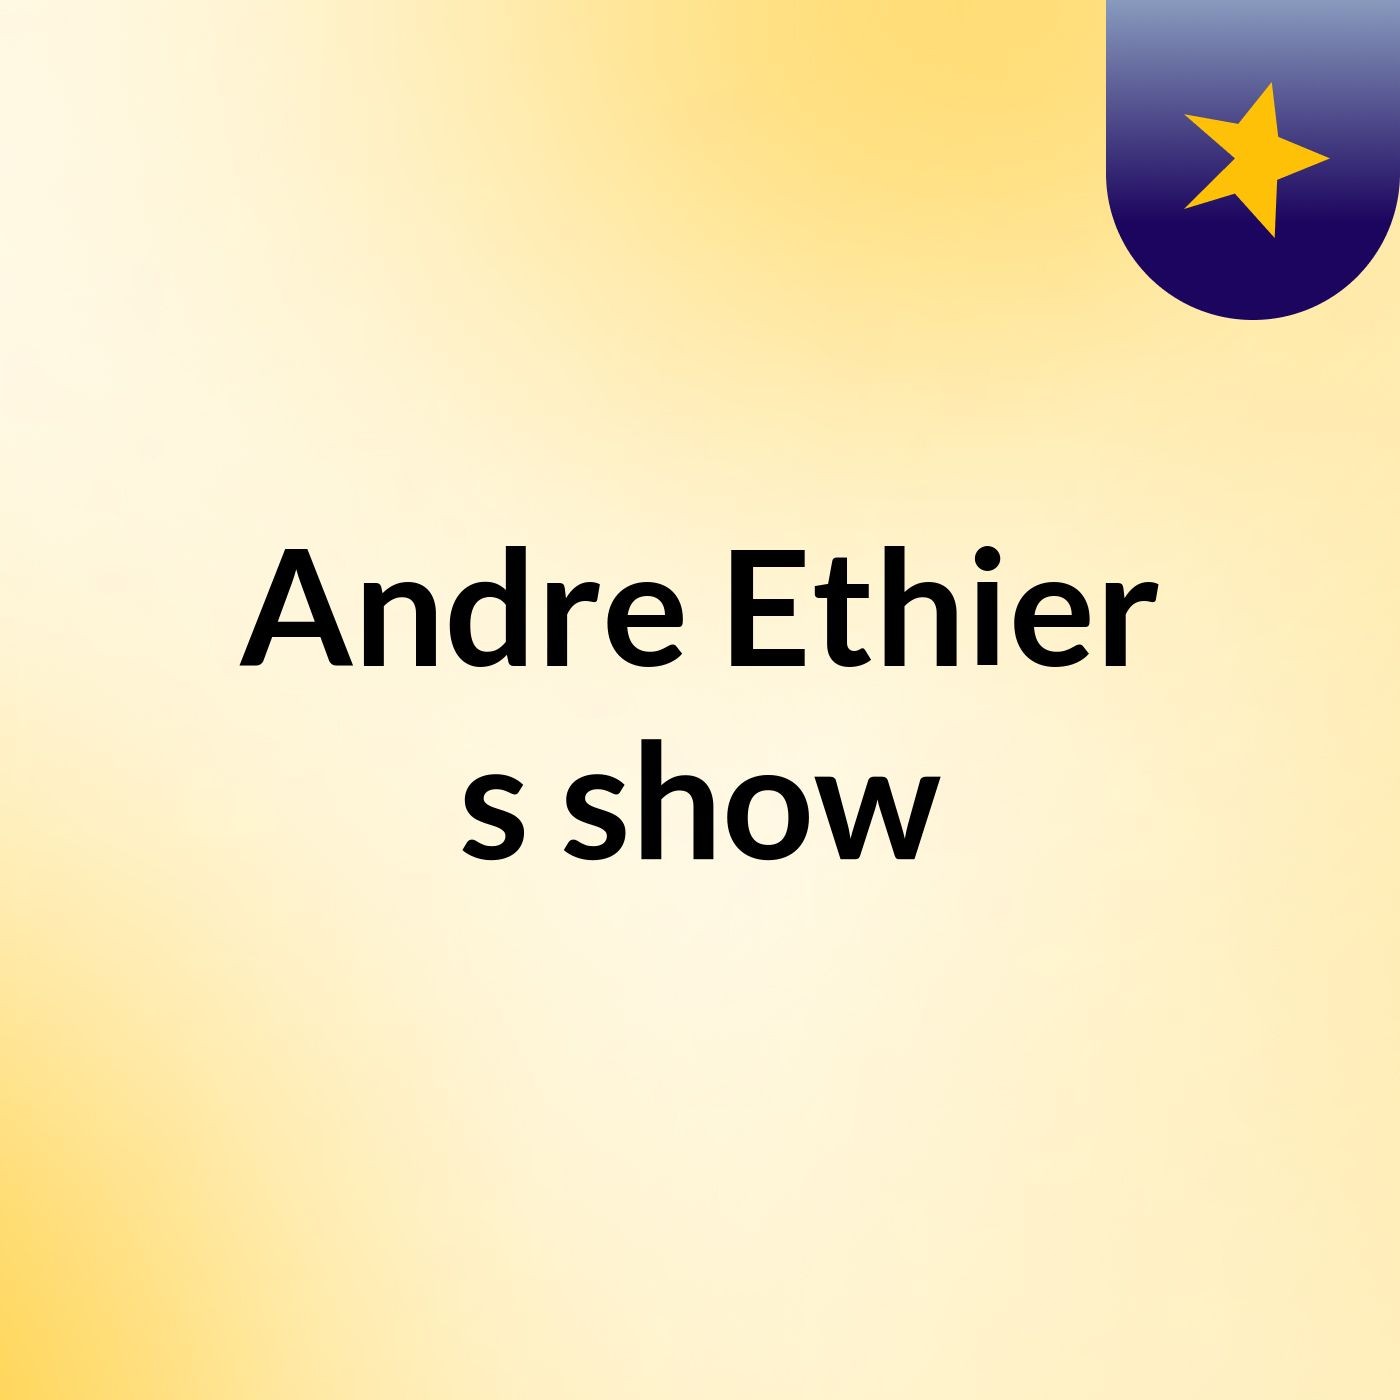 Andre Ethier's show